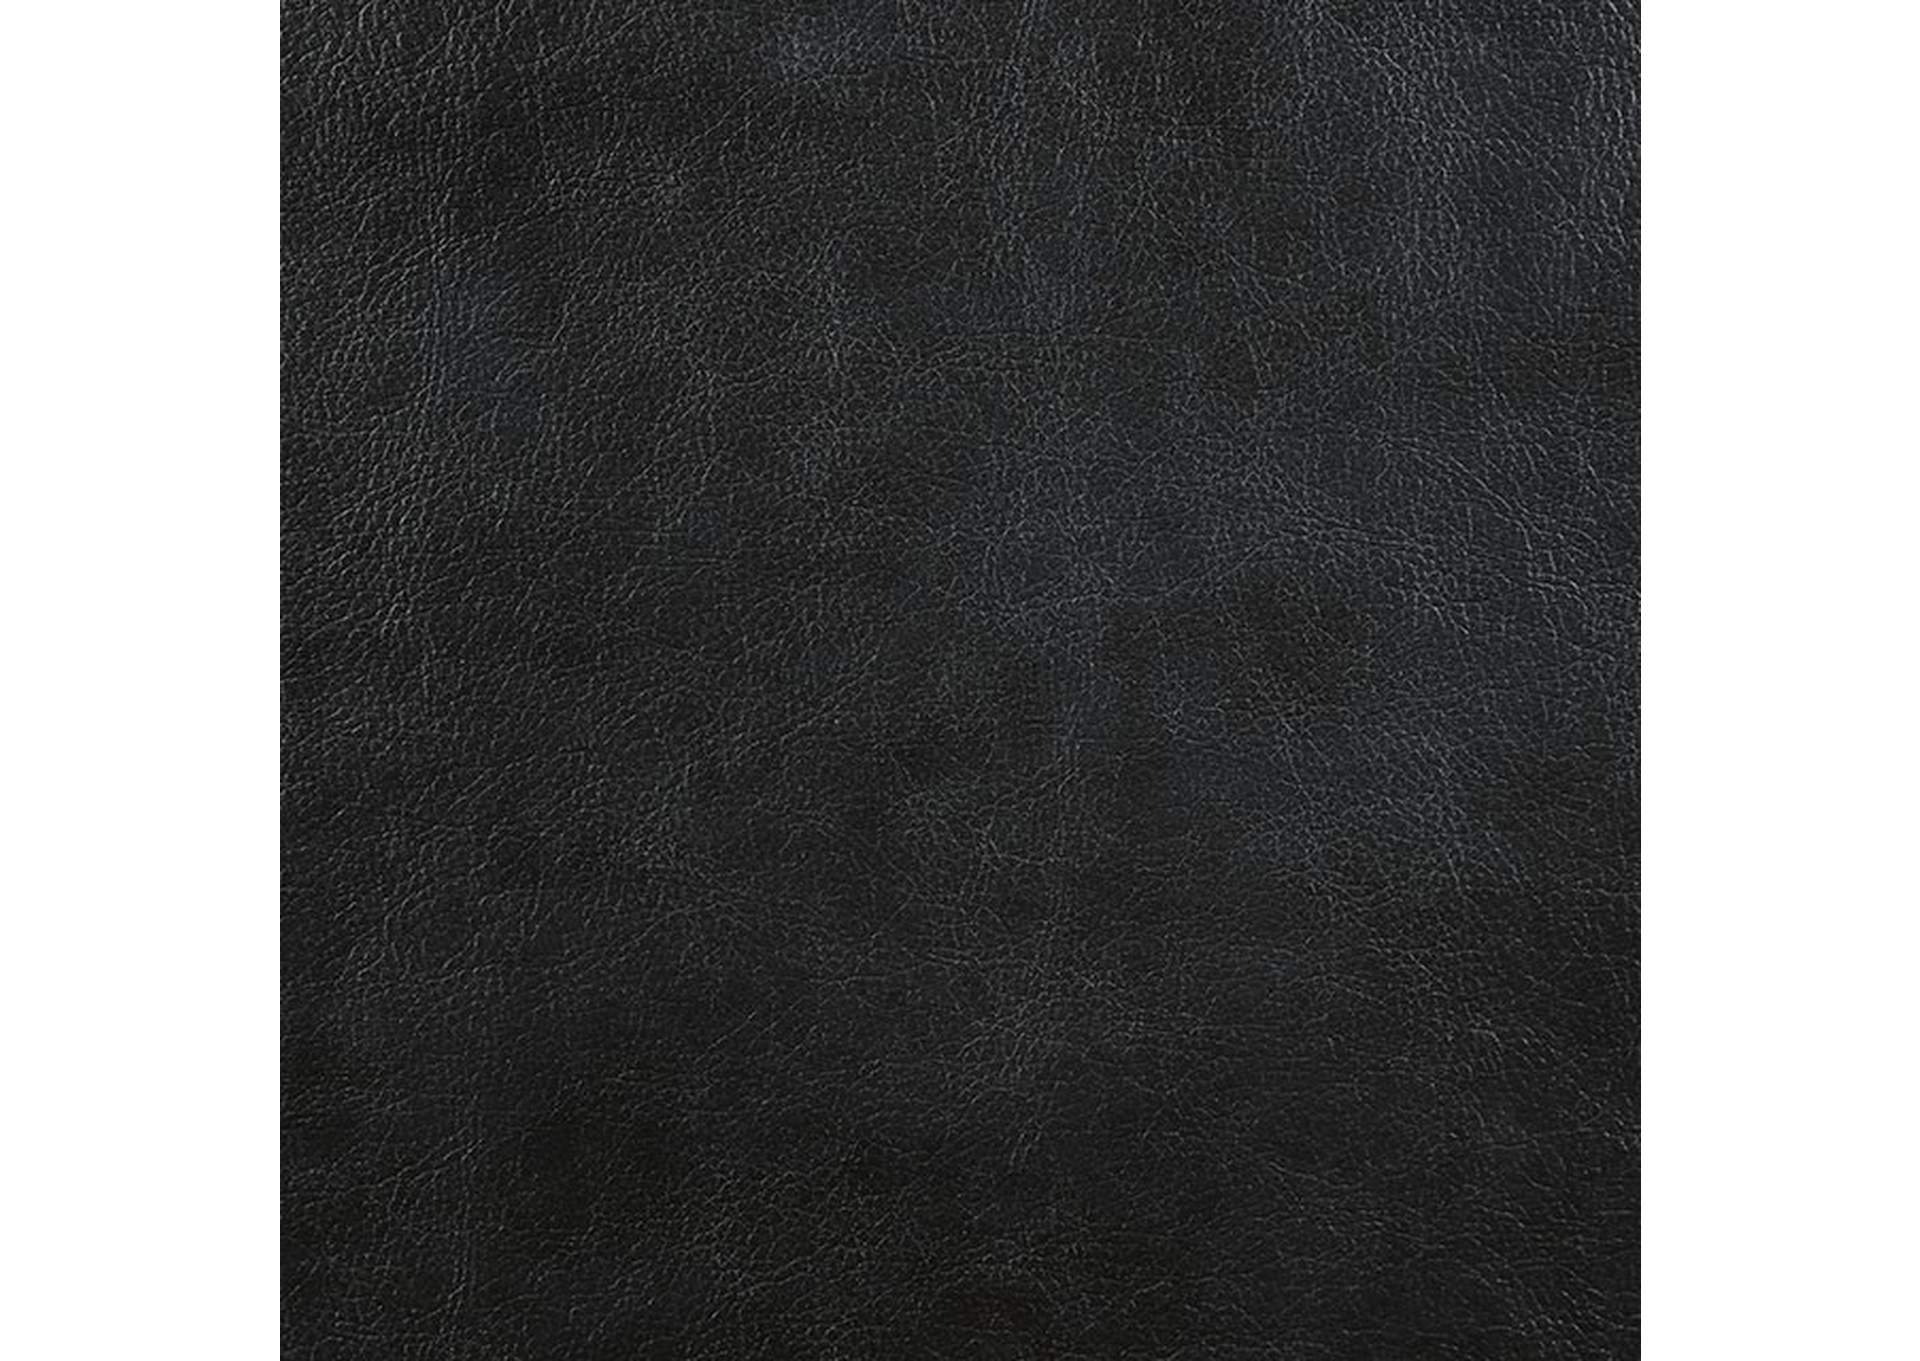 Pollux Black Sofa,Furniture of America